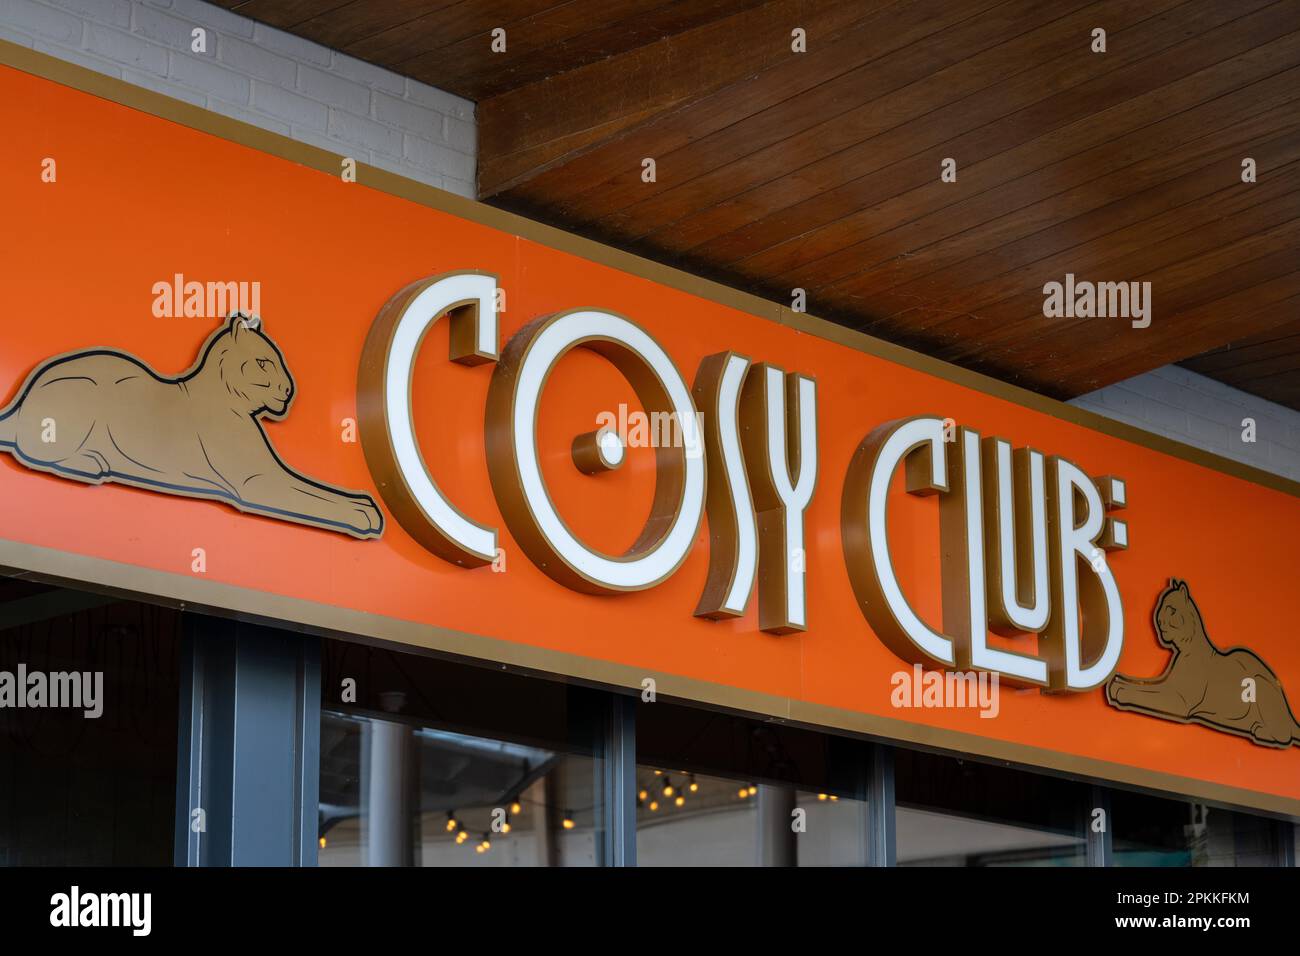 Cosy Club sign. Stock Photo